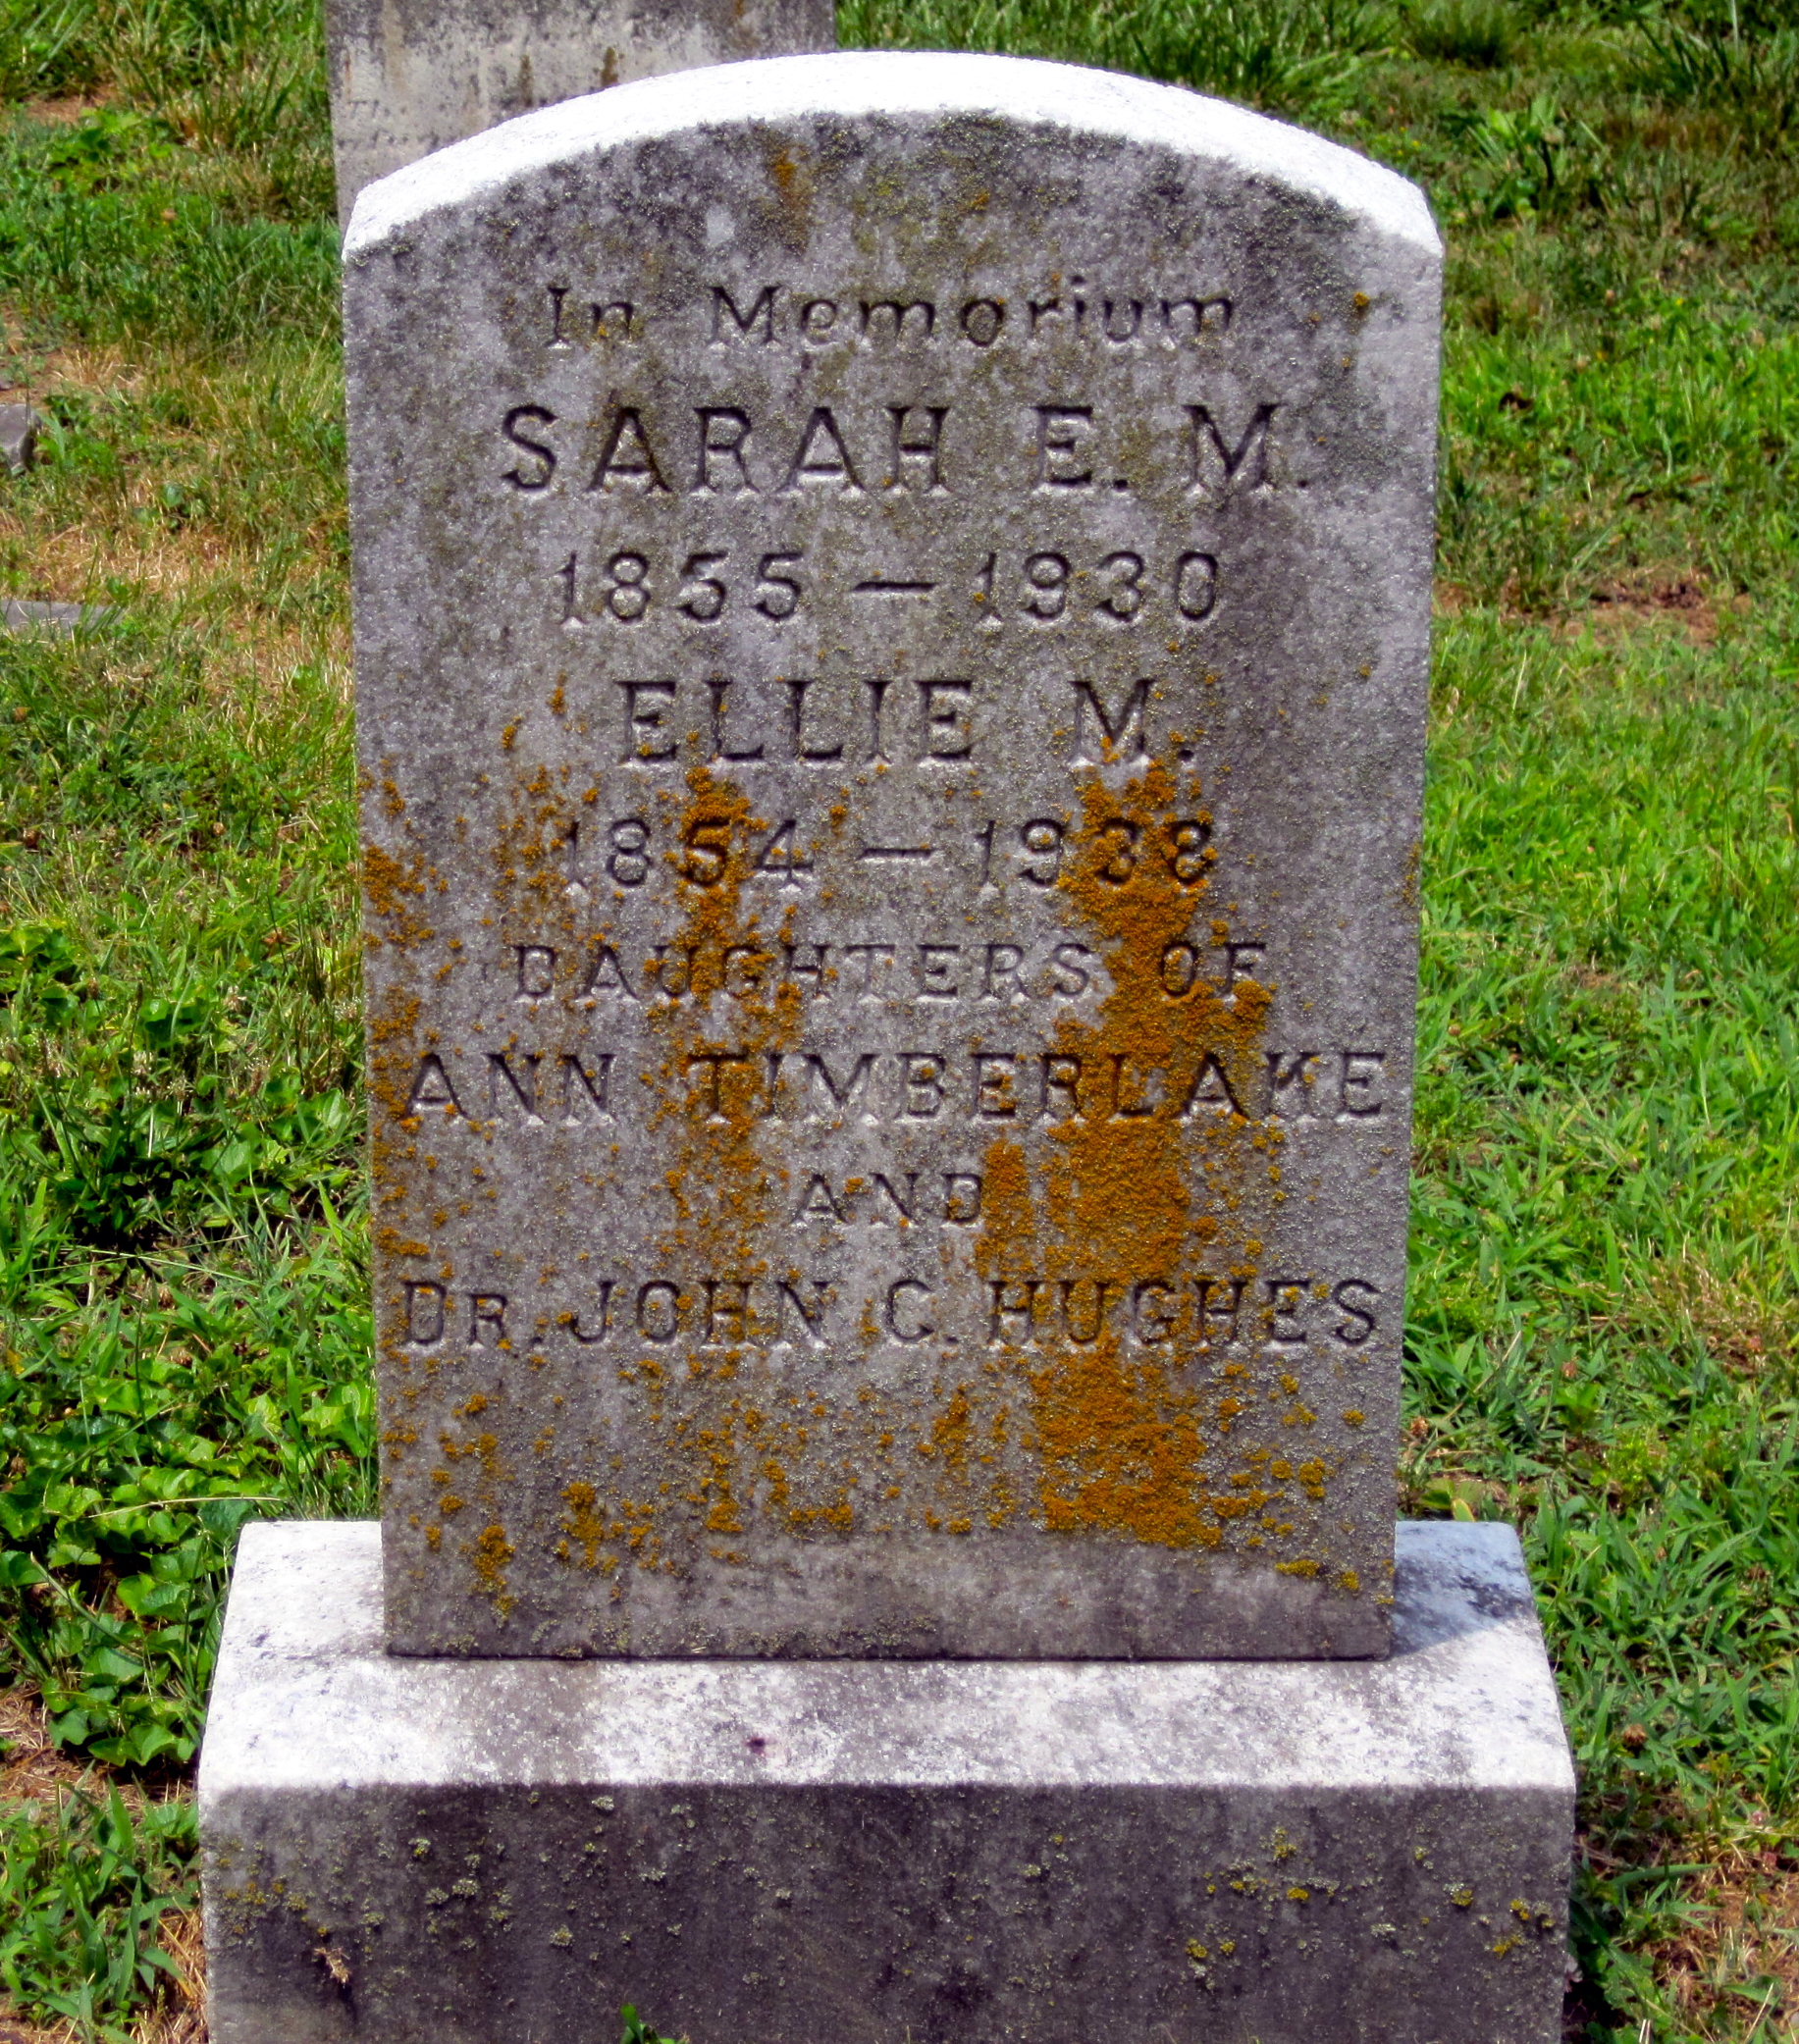 Sarah E.M. and Ellie M. Hughes grave marker